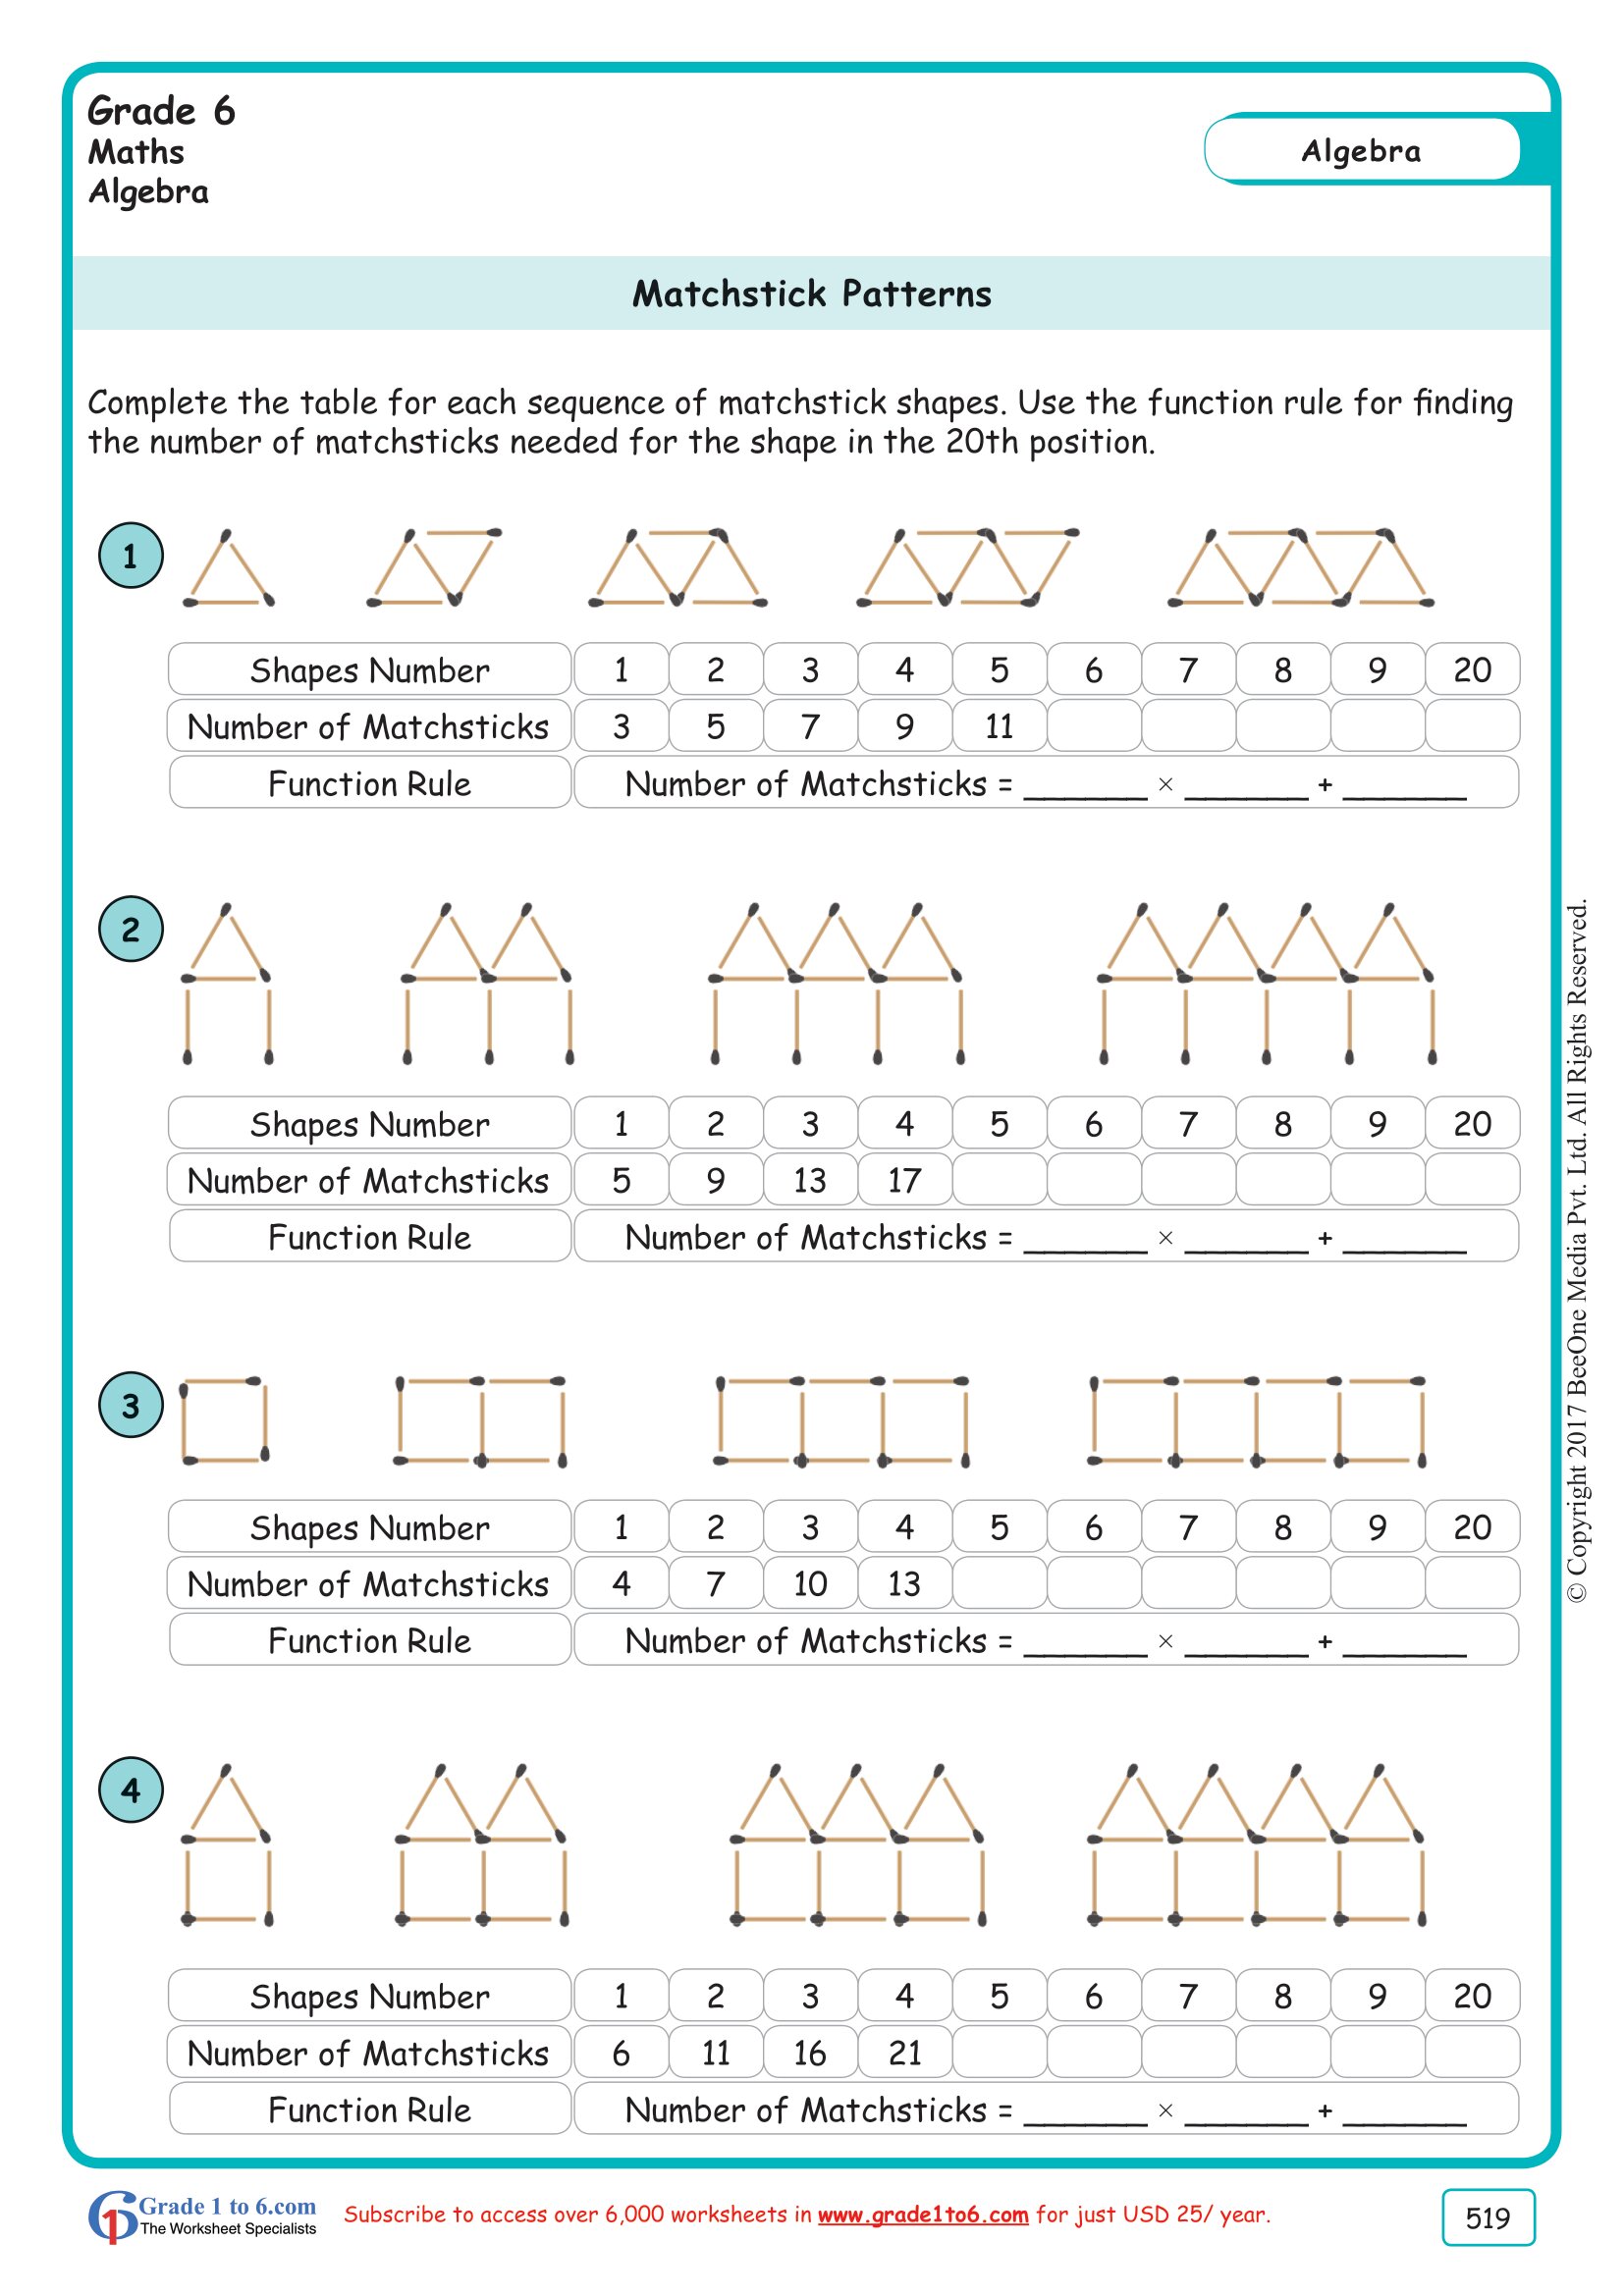 Algebra Worksheet For Class 6 Free Printable Basic Math Worksheets Activity Shelter Order